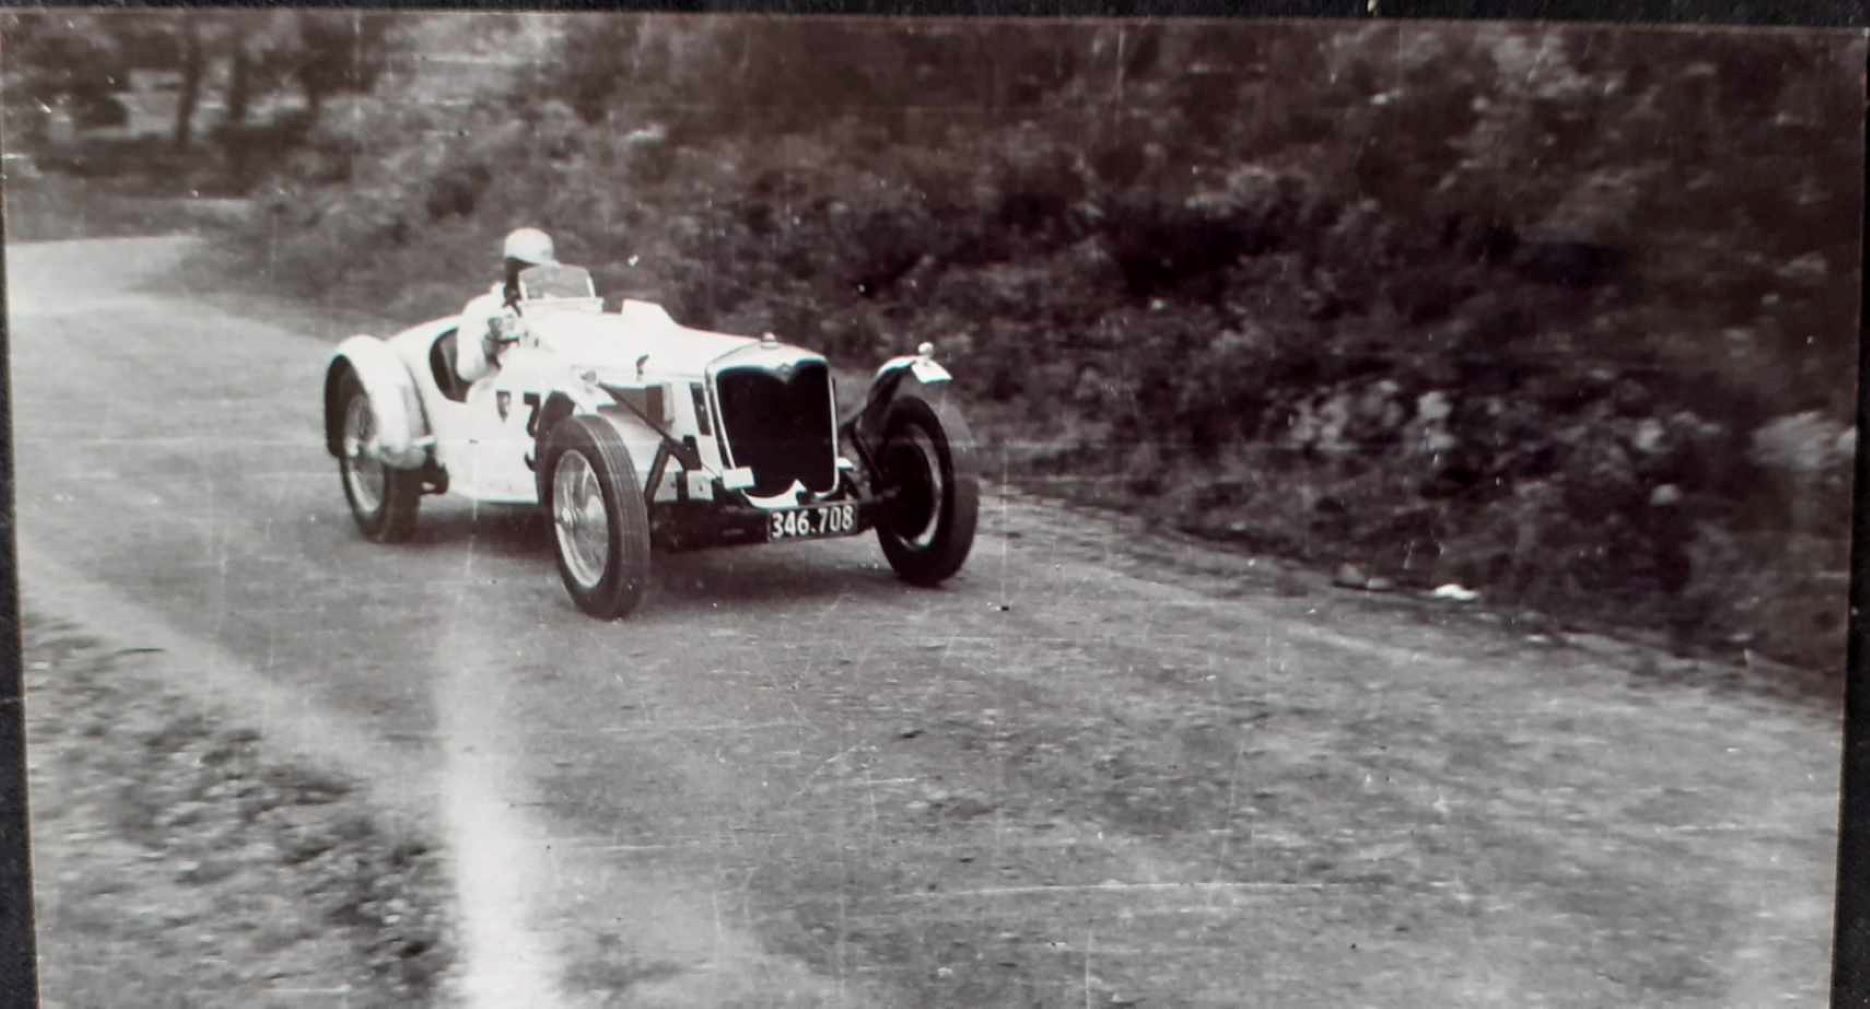 Name:  NSCC 1950 #0122 Riley Race #3 Q at Hill Climb - 346.708 1951 -56 plate 1950's - image Graeme Wel.jpg
Views: 191
Size:  178.4 KB